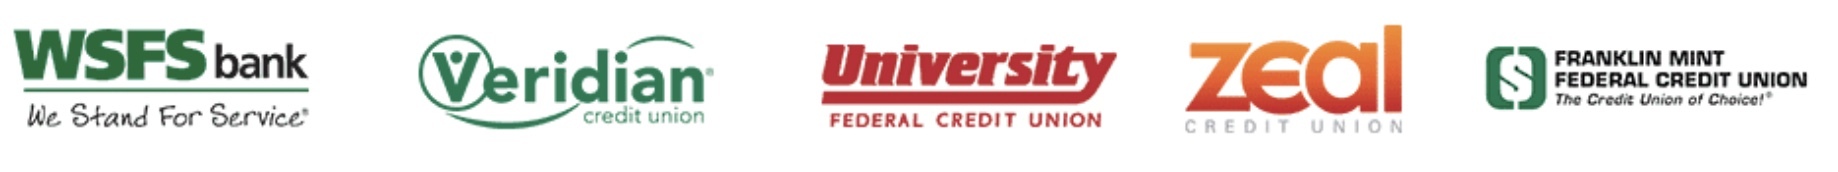 LendKey Lenders - Customer bank, WSFS Bank, Veridian credit union, university federal credit union, zeal credit union, Franklin mint federal credit union